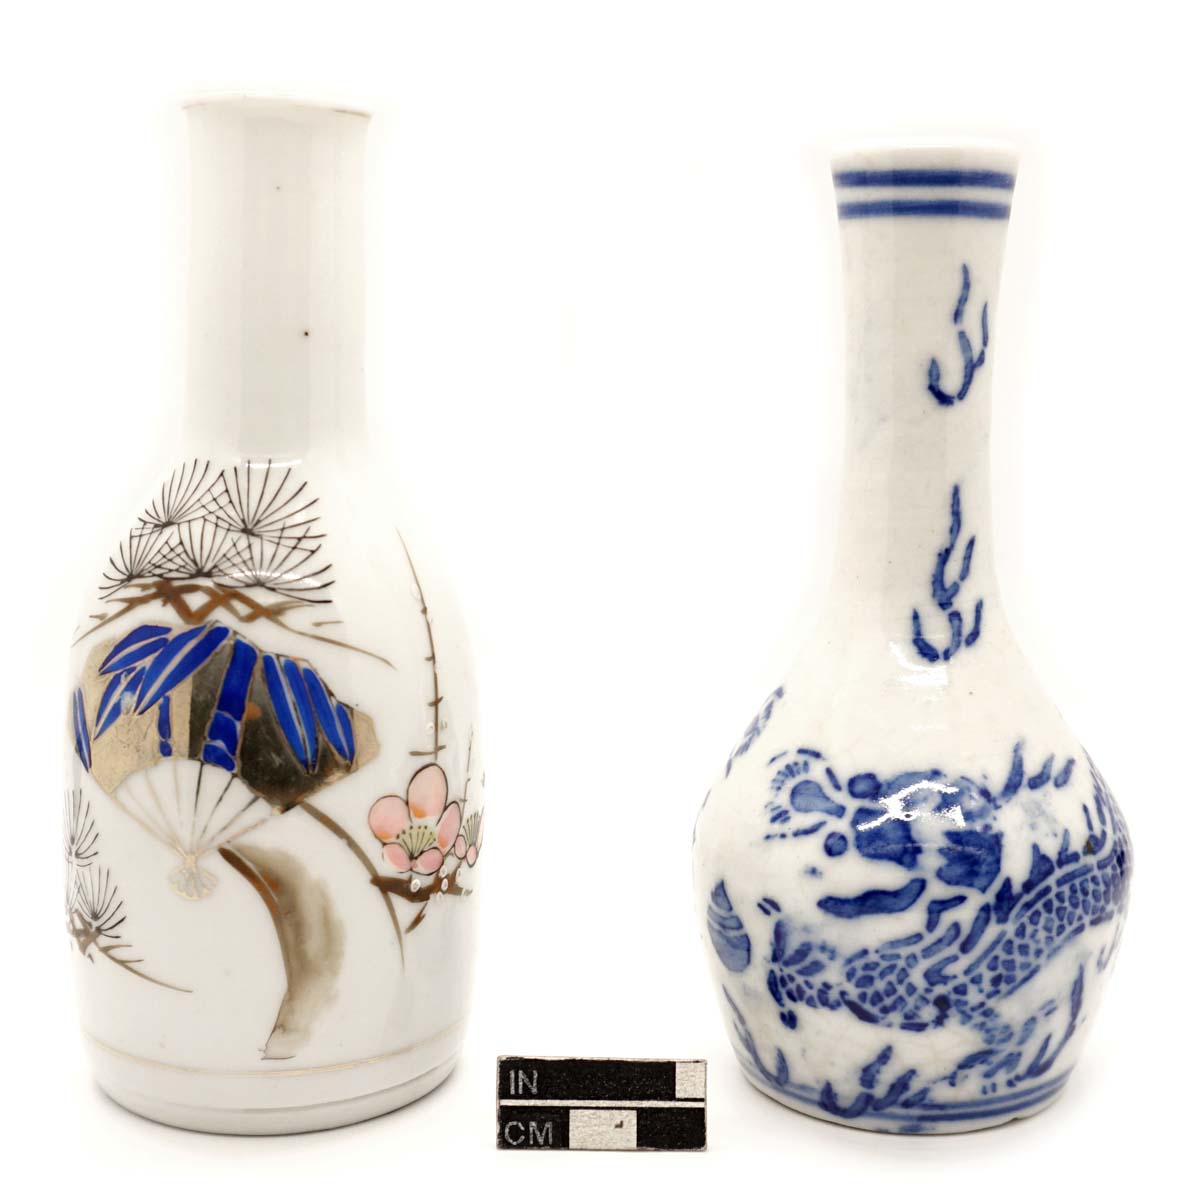 Tokkuri (vessels for heating and serving sake), overglaze enamel (iro-e) and katagami stencil decoration, porcelain.